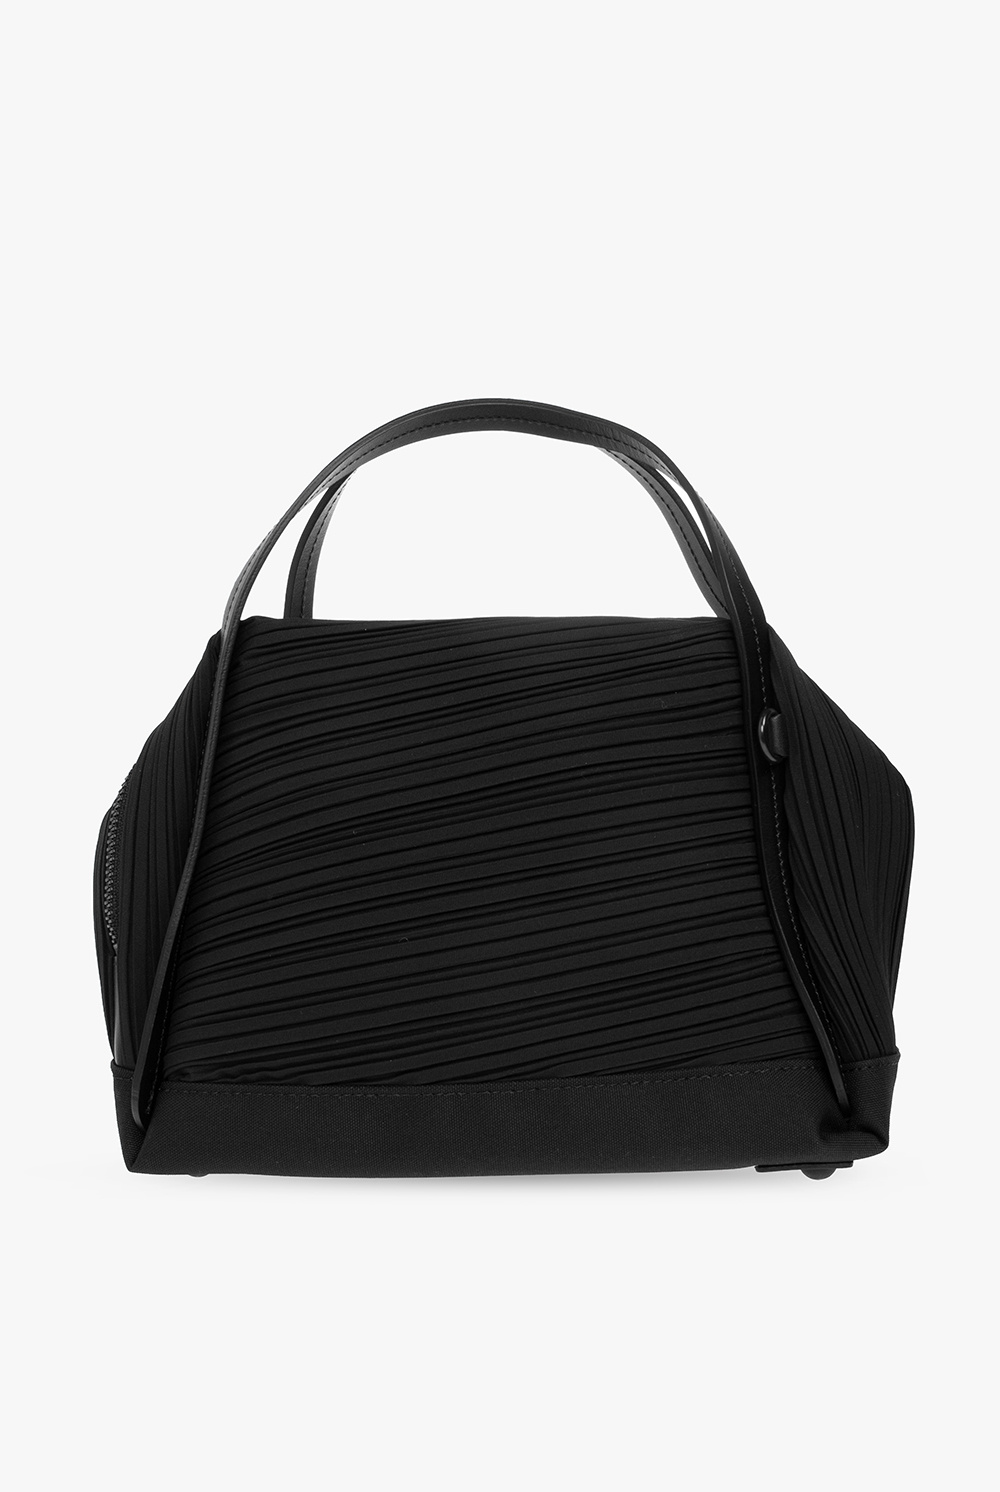 Issey Miyake Pleats Please ‘Bias Pleats’ shoulder bag | Women's Bags ...